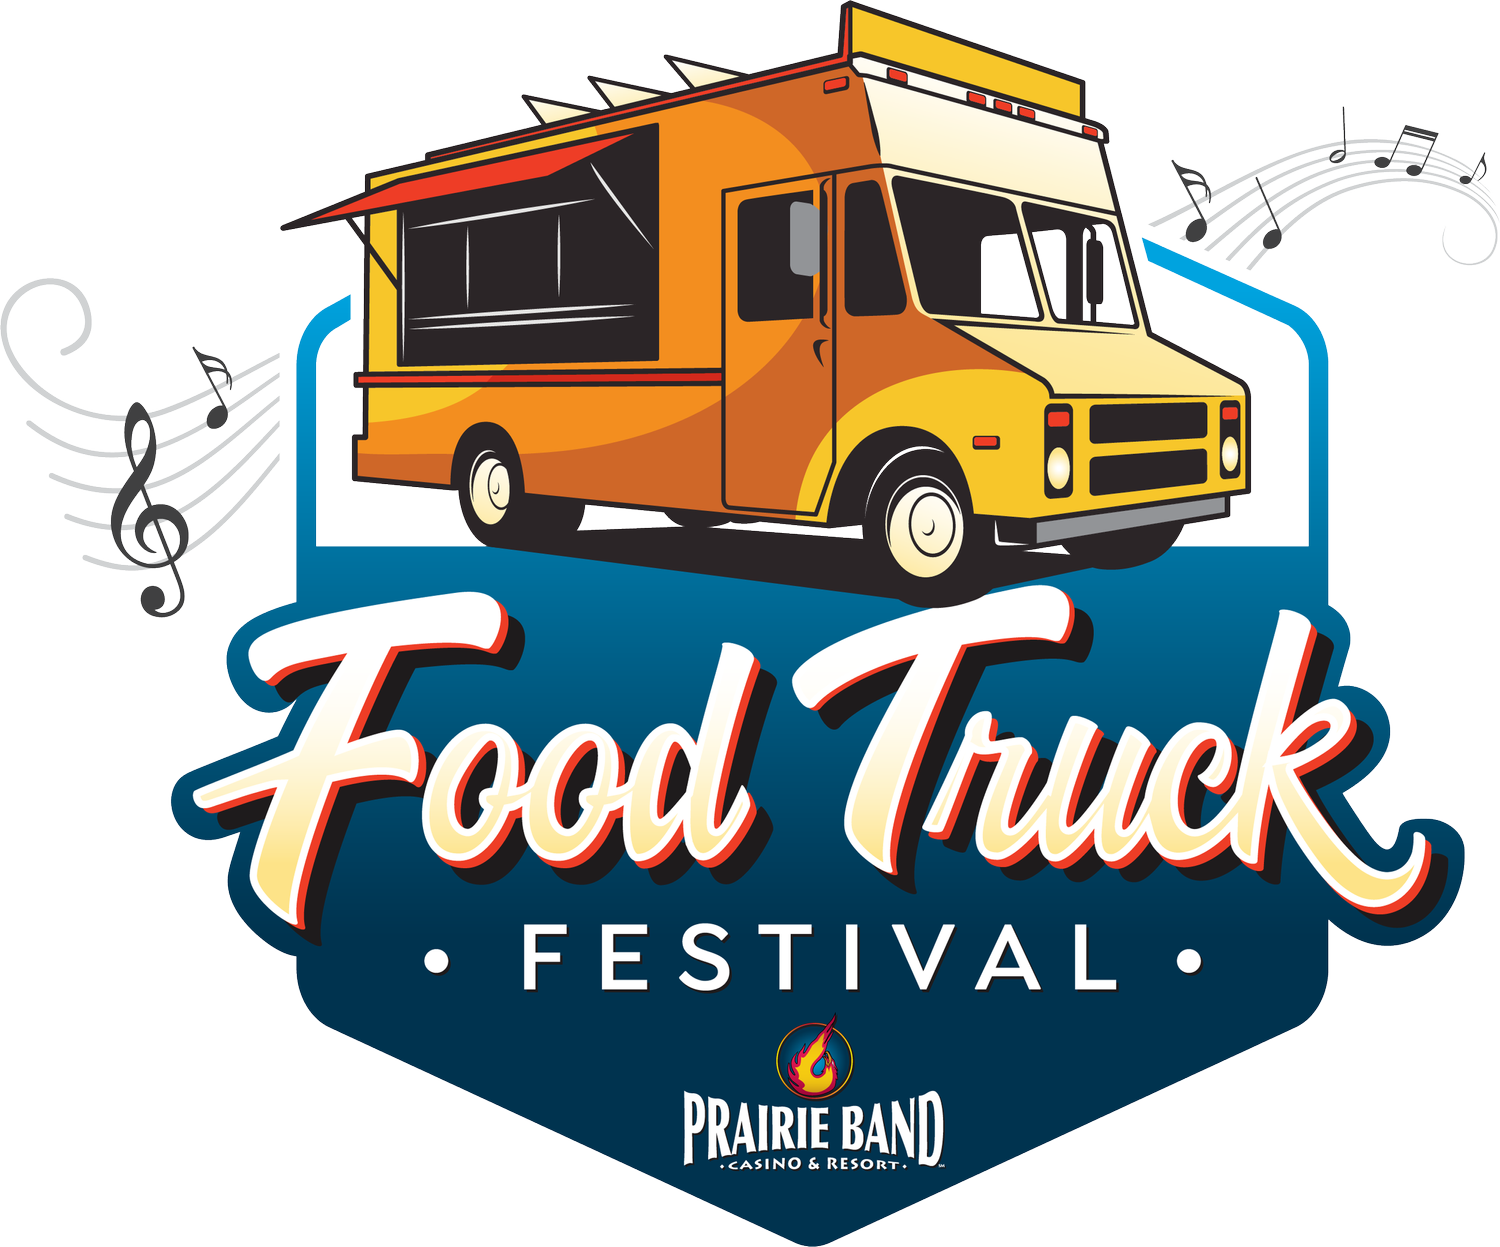 Food Truck Festival Coming to Prairie Band Casino & Resort! — TK